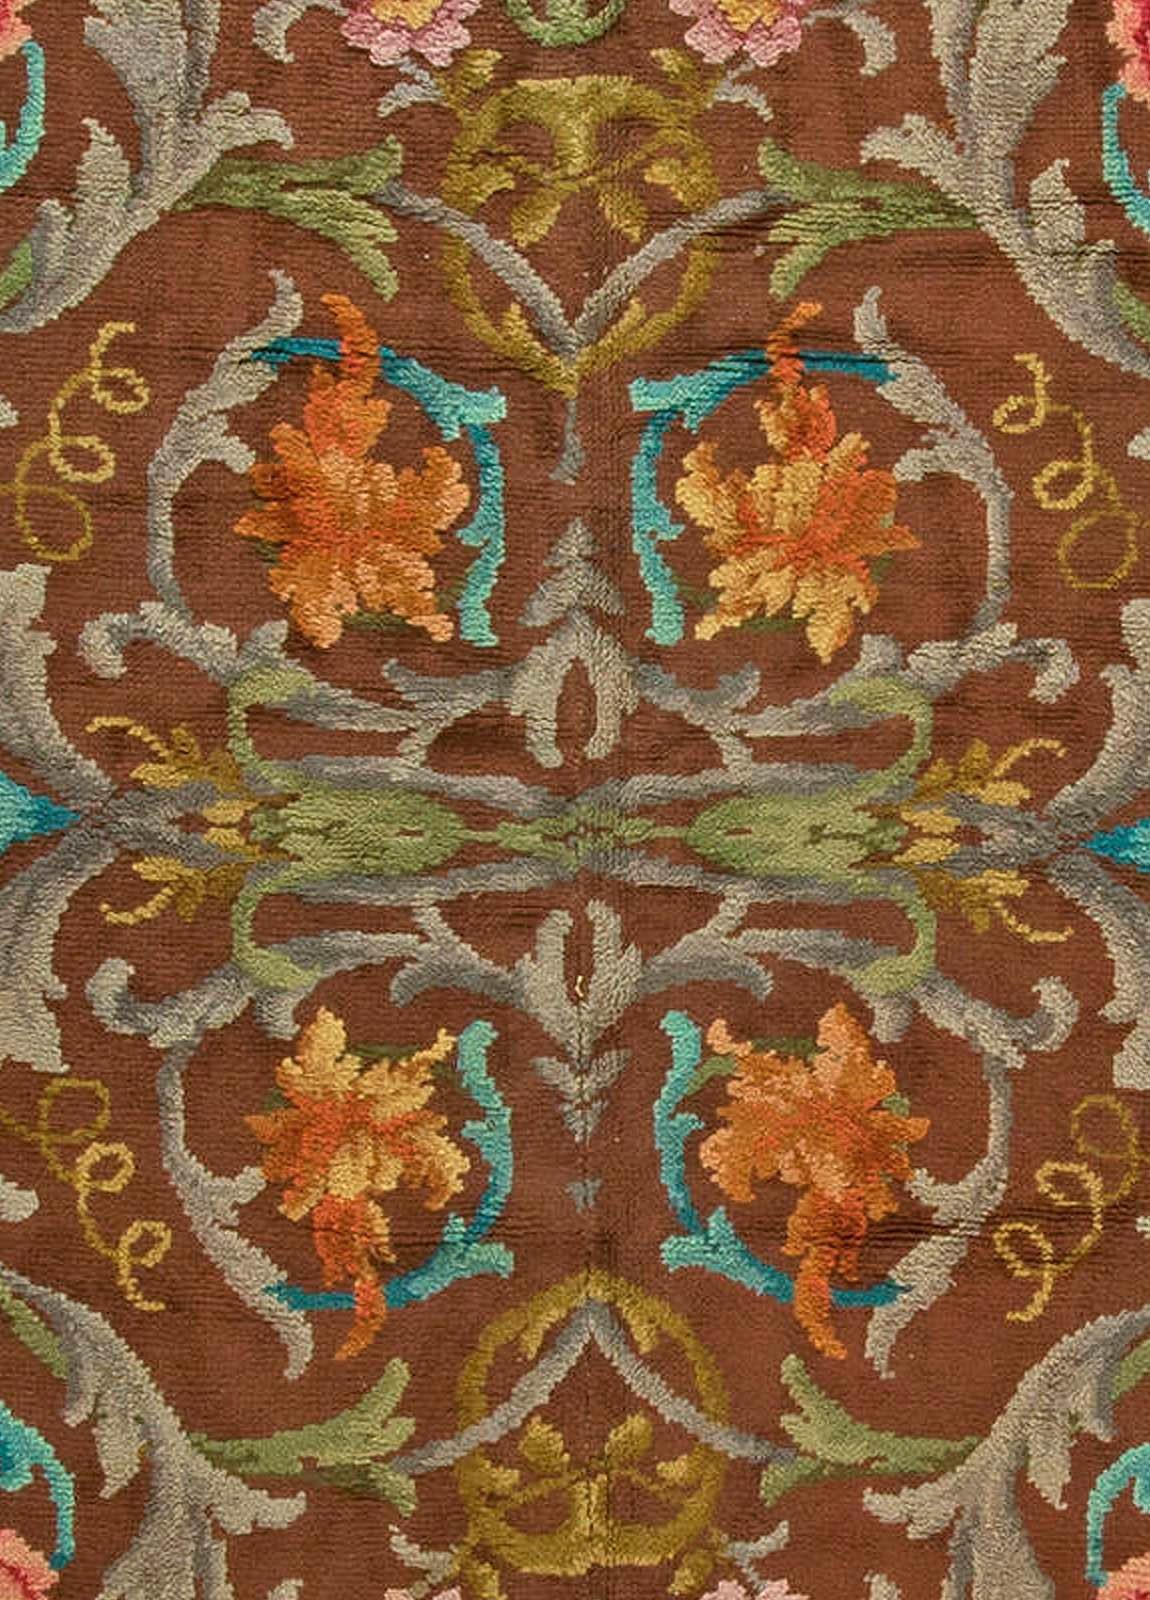 Vintage Spanish Botanic handmade wool rug
Size: 12'0